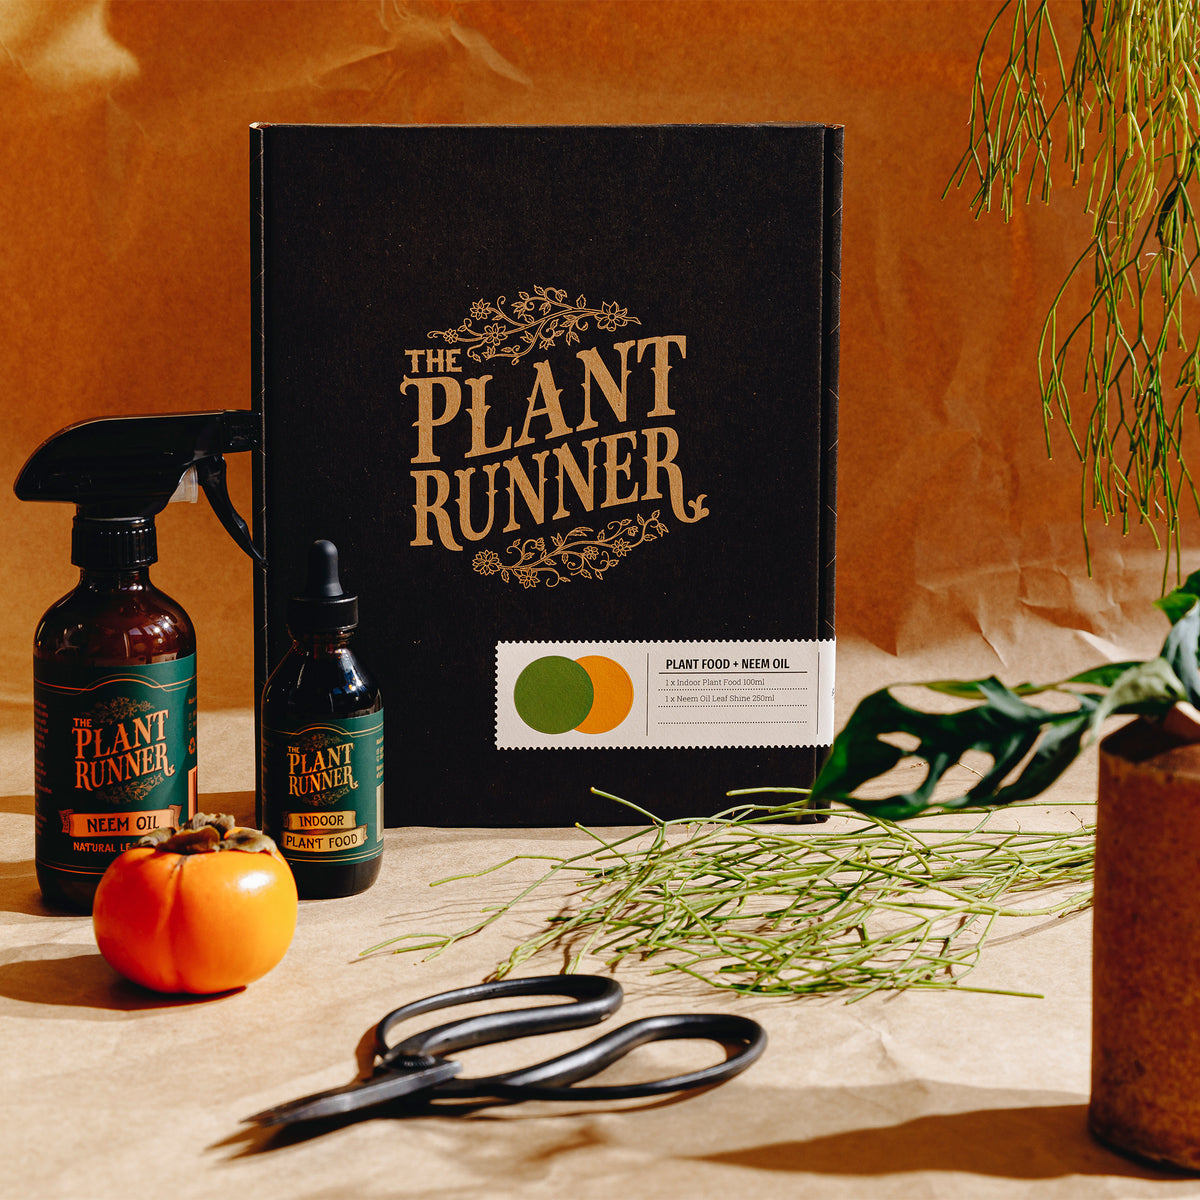 THE PLANT RUNNER INDOOR PLANT FOOD plantary munash organics 